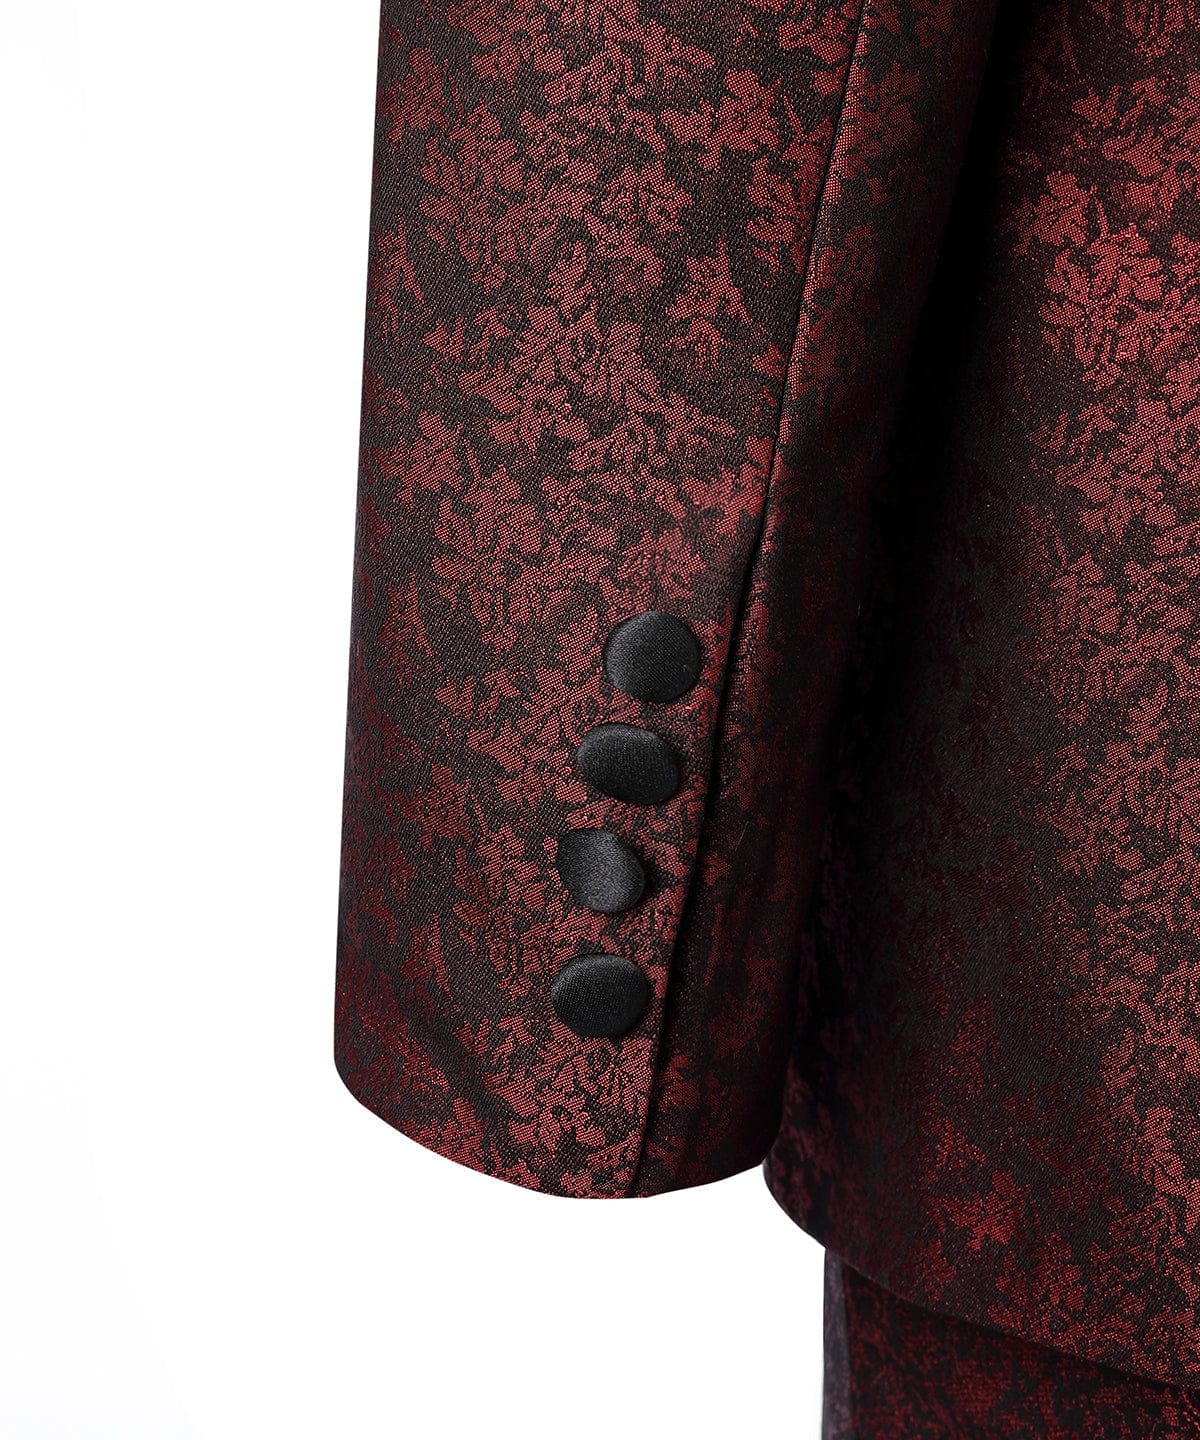 ceehuteey Mens Suit 3 Pieces Formal Business Shawl Lapel Plaid Tuxedos Jacket for Wedding Groom(Blazer+Vest+Pants)